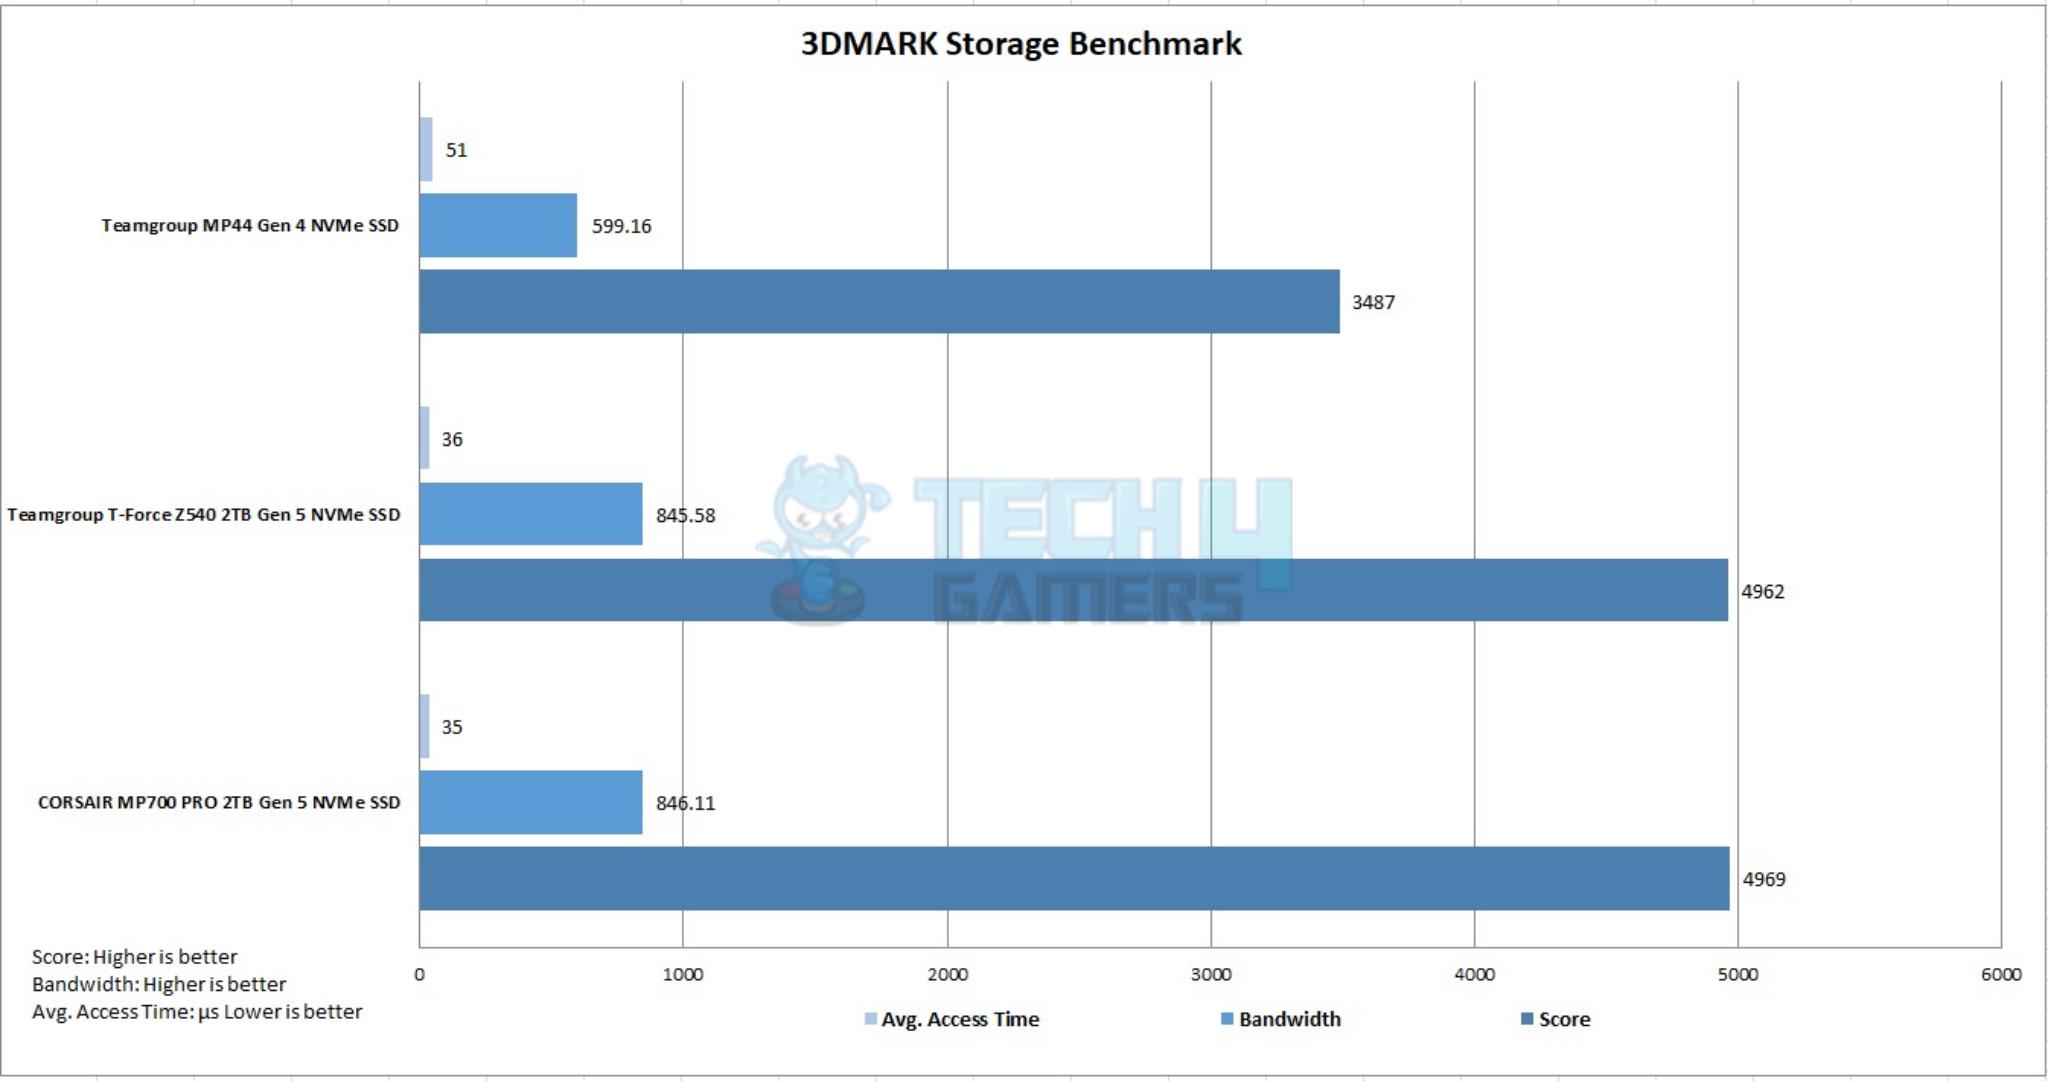 CORSAIR MP700 PRO 2TB Gen5 NVMe SSD — 3DMARK Storage Benchmark